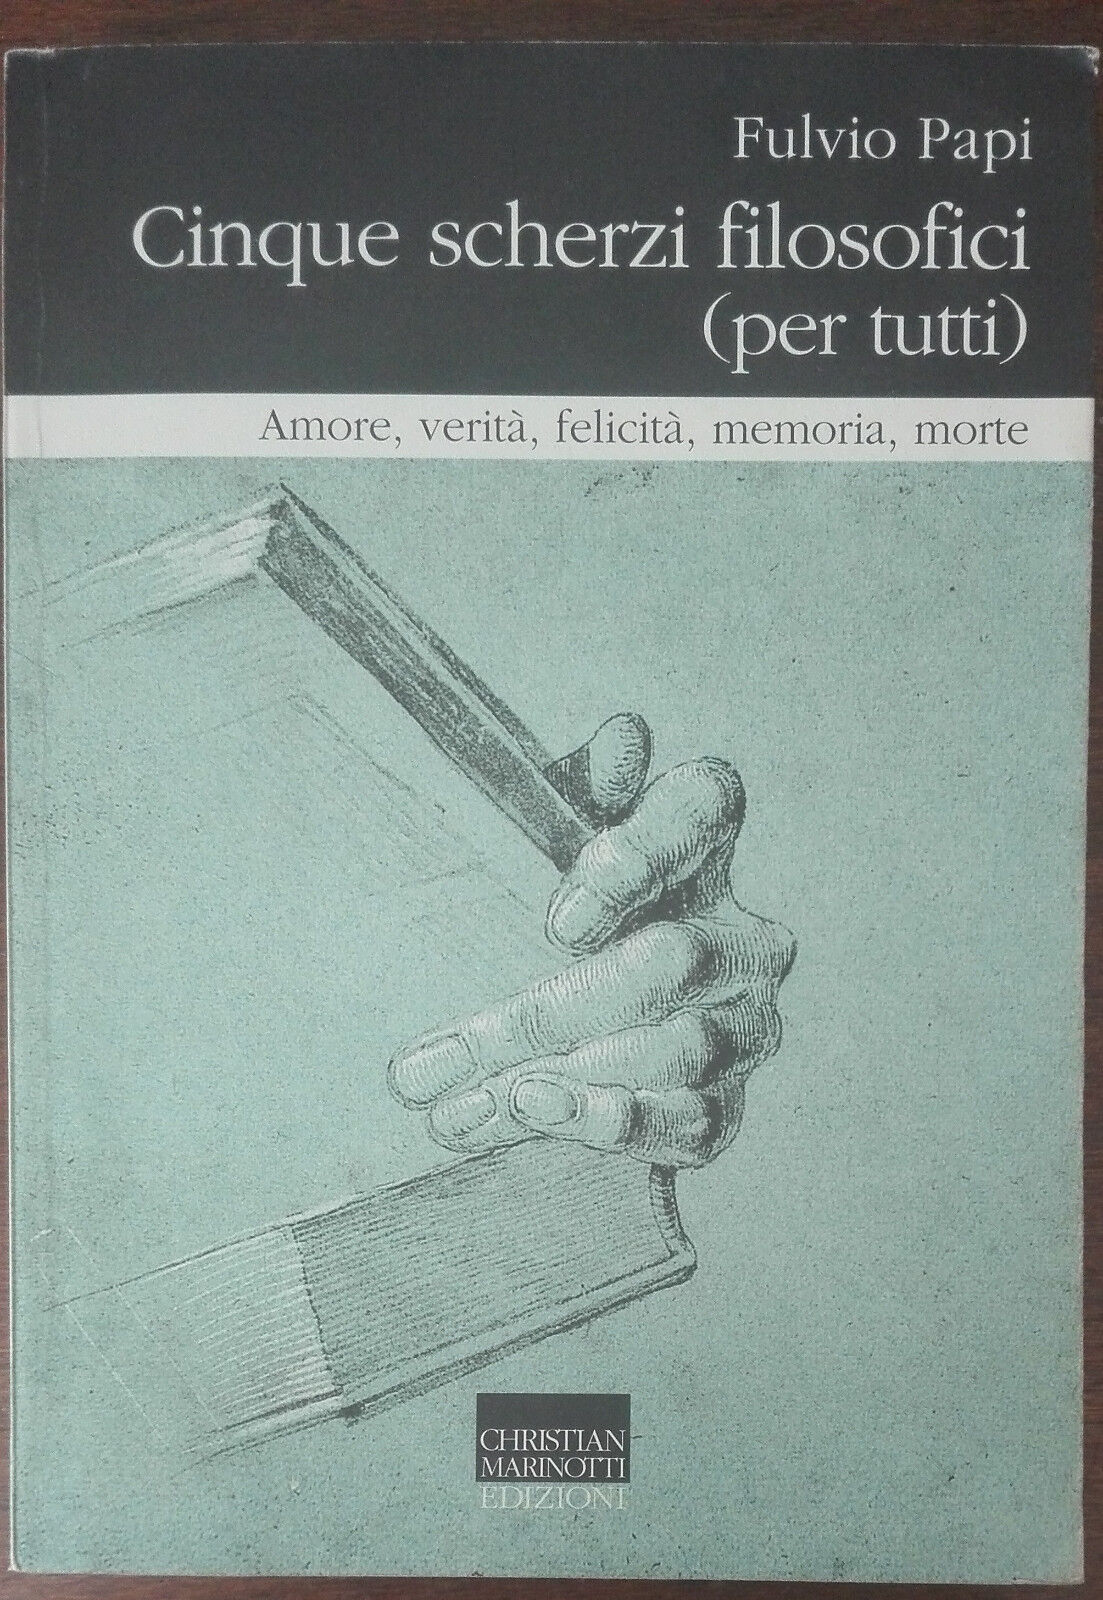 Cinque scherzi filosofici (per tutti) - Fulvio Papi - Christian Marinotti,2001-A